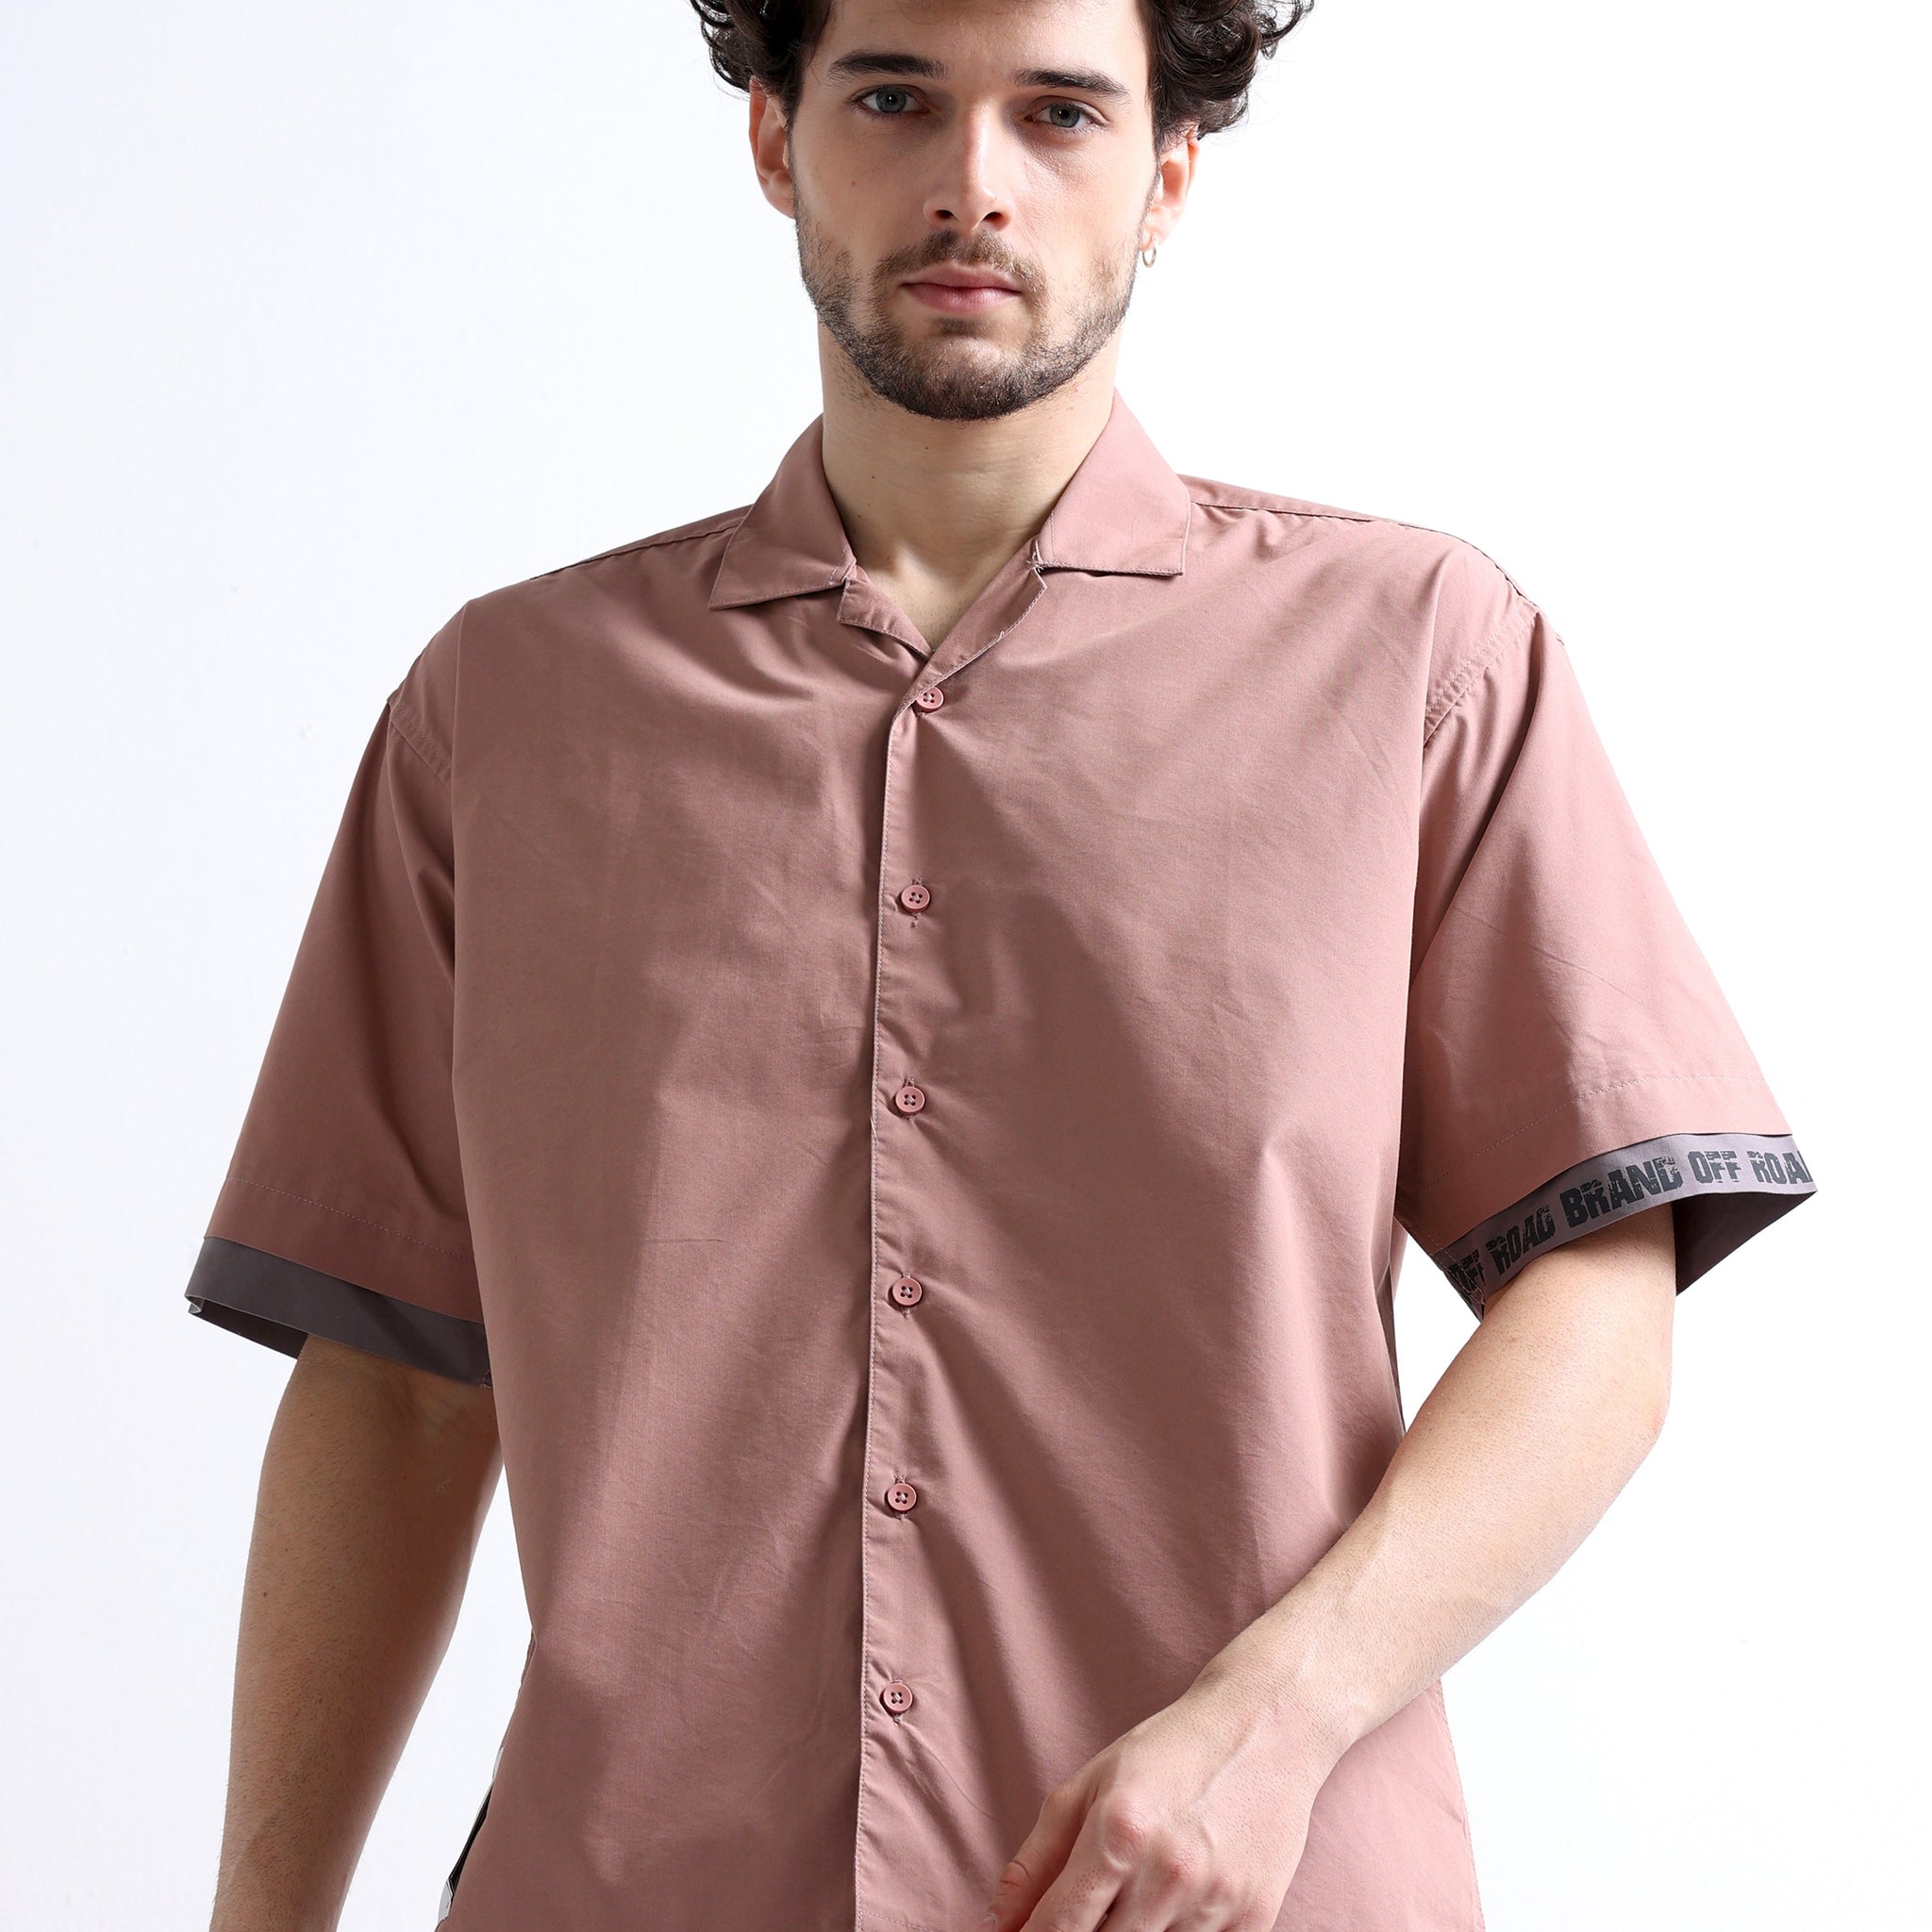 Buy Cuban Collar Half Sleeve Print at Left Sleeve Hem Men's Wear Shirt Online